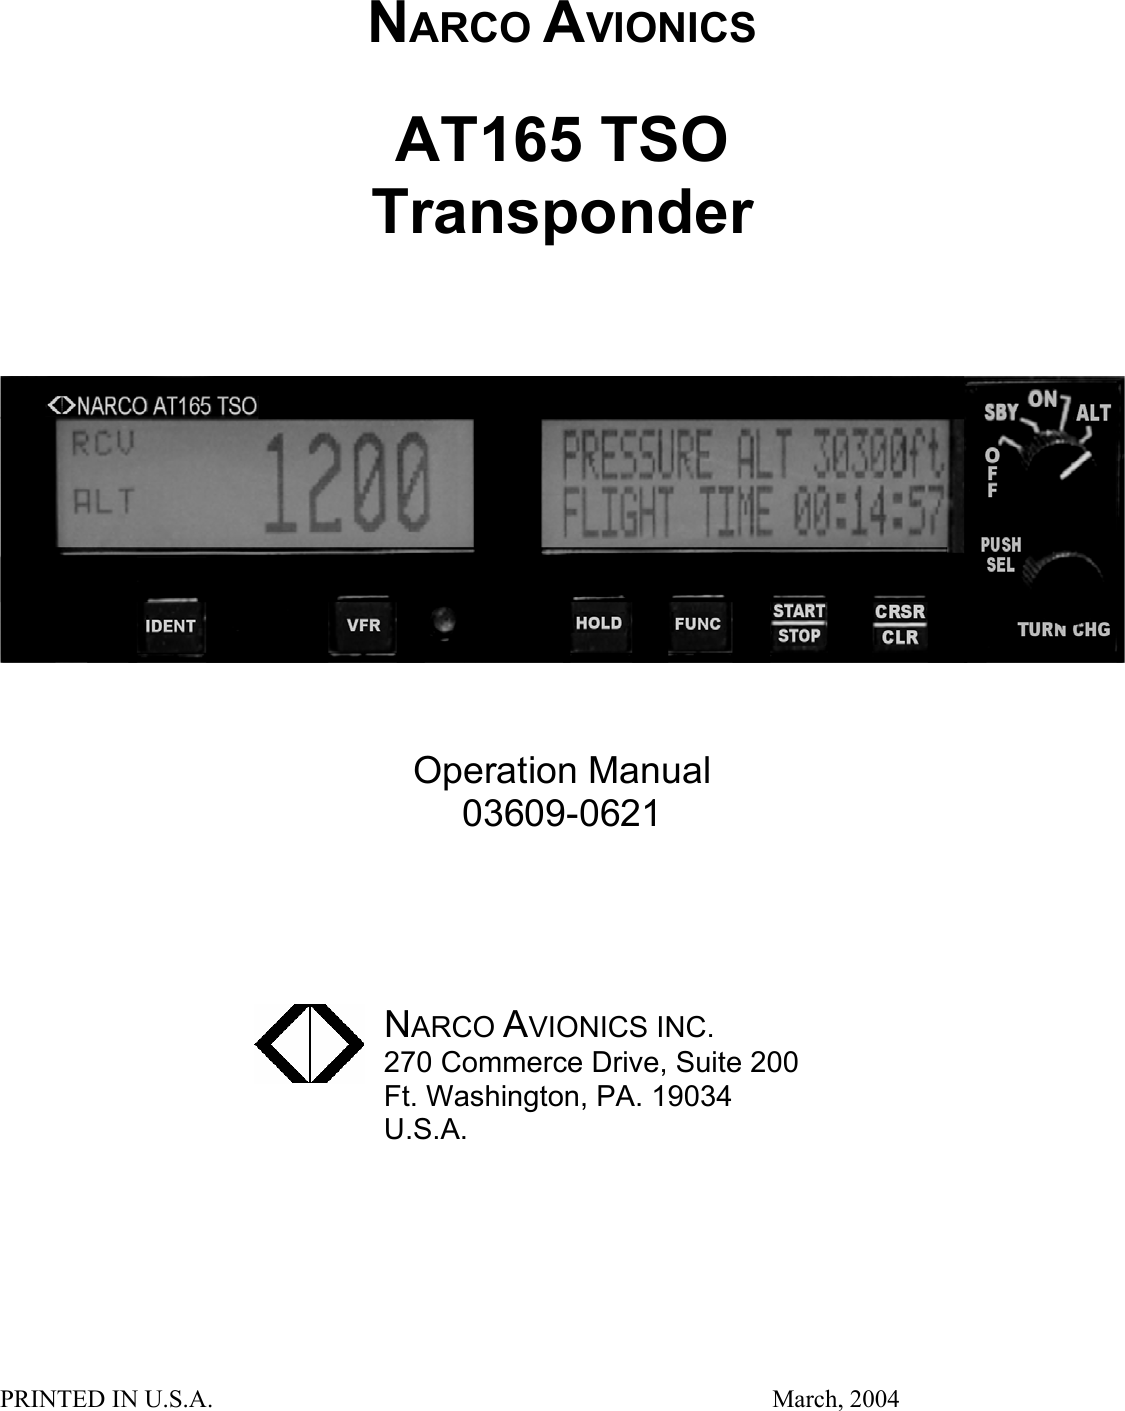 PRINTED IN U.S.A.    March, 2004 NARCO AVIONICS  AT165 TSO  Transponder       Operation Manual 03609-0621      NARCO AVIONICS INC. 270 Commerce Drive, Suite 200 Ft. Washington, PA. 19034 U.S.A.  